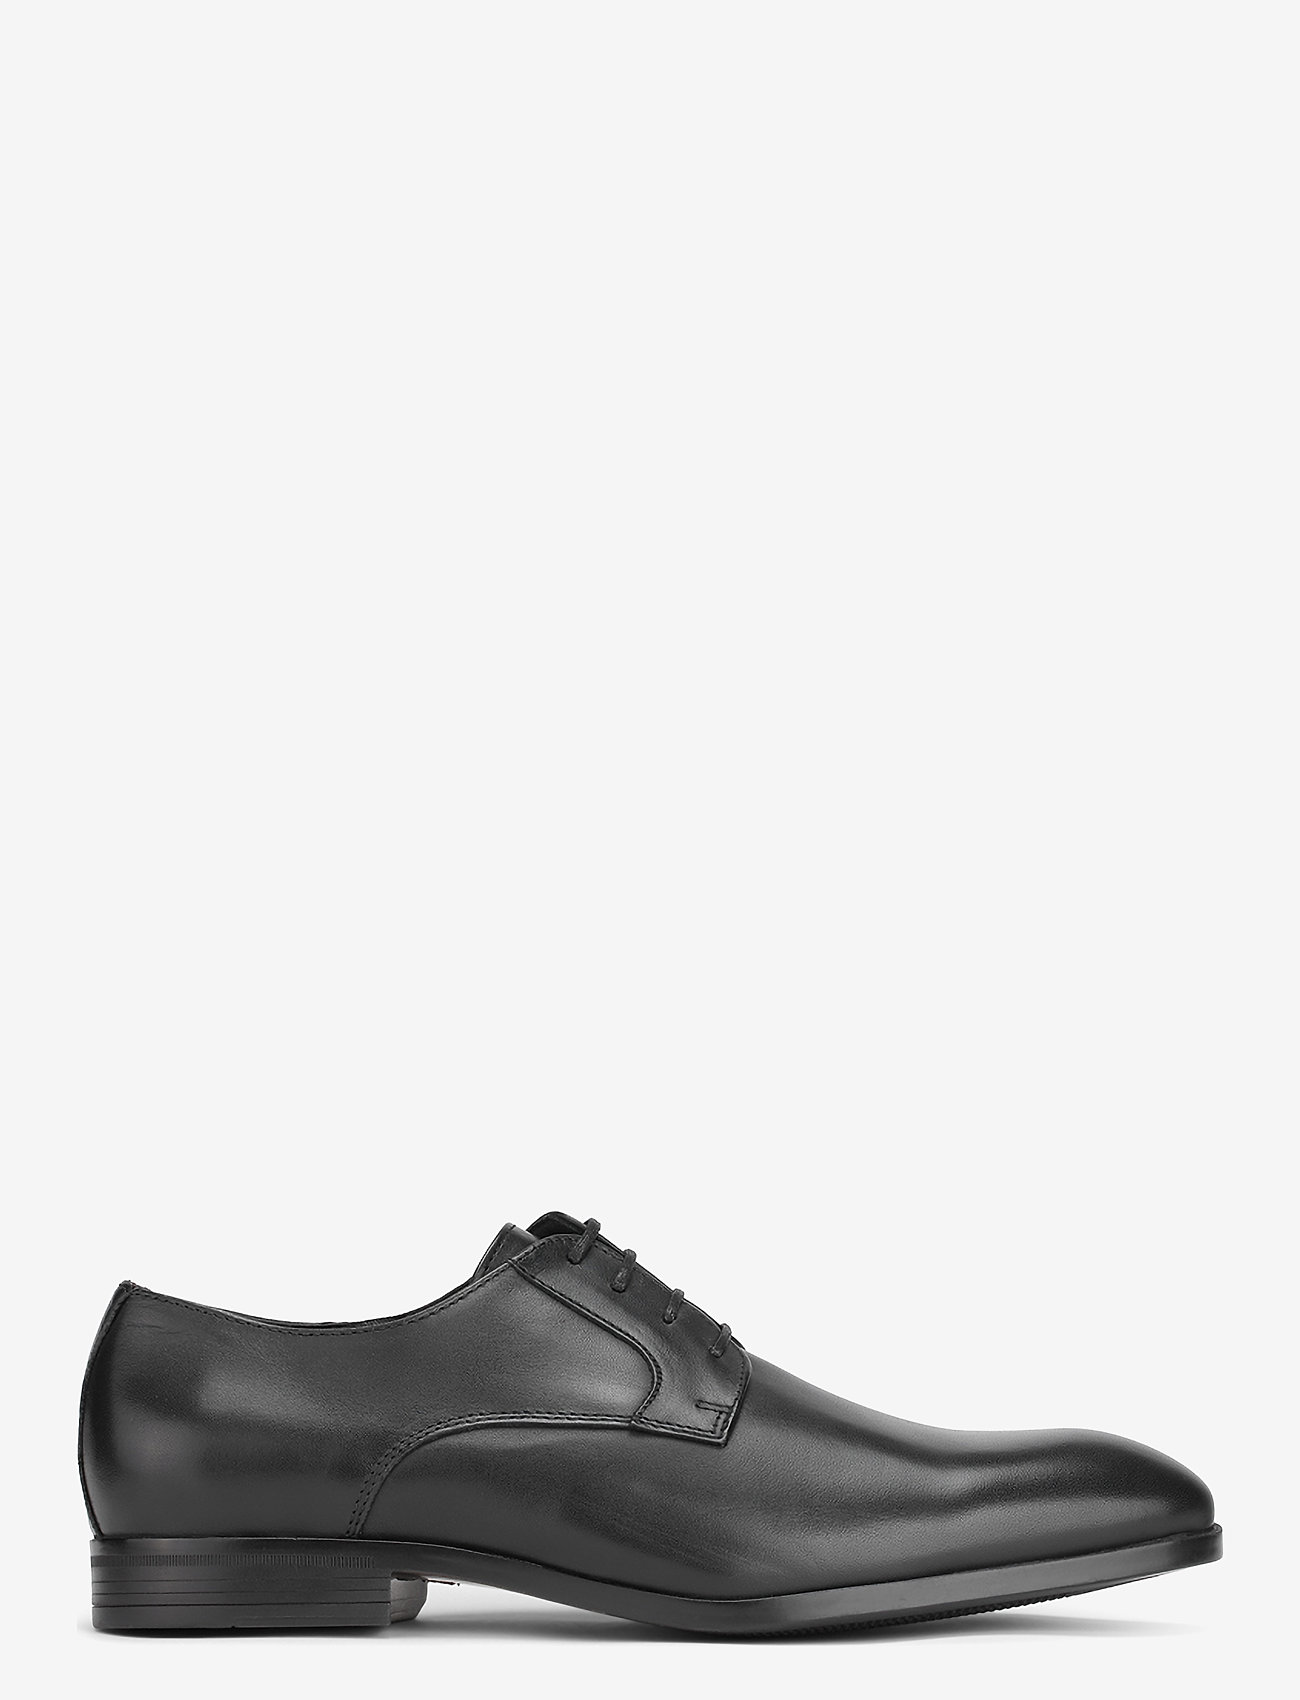 Playboy Footwear - PB10048 - buty sznurowane - black leather - 1